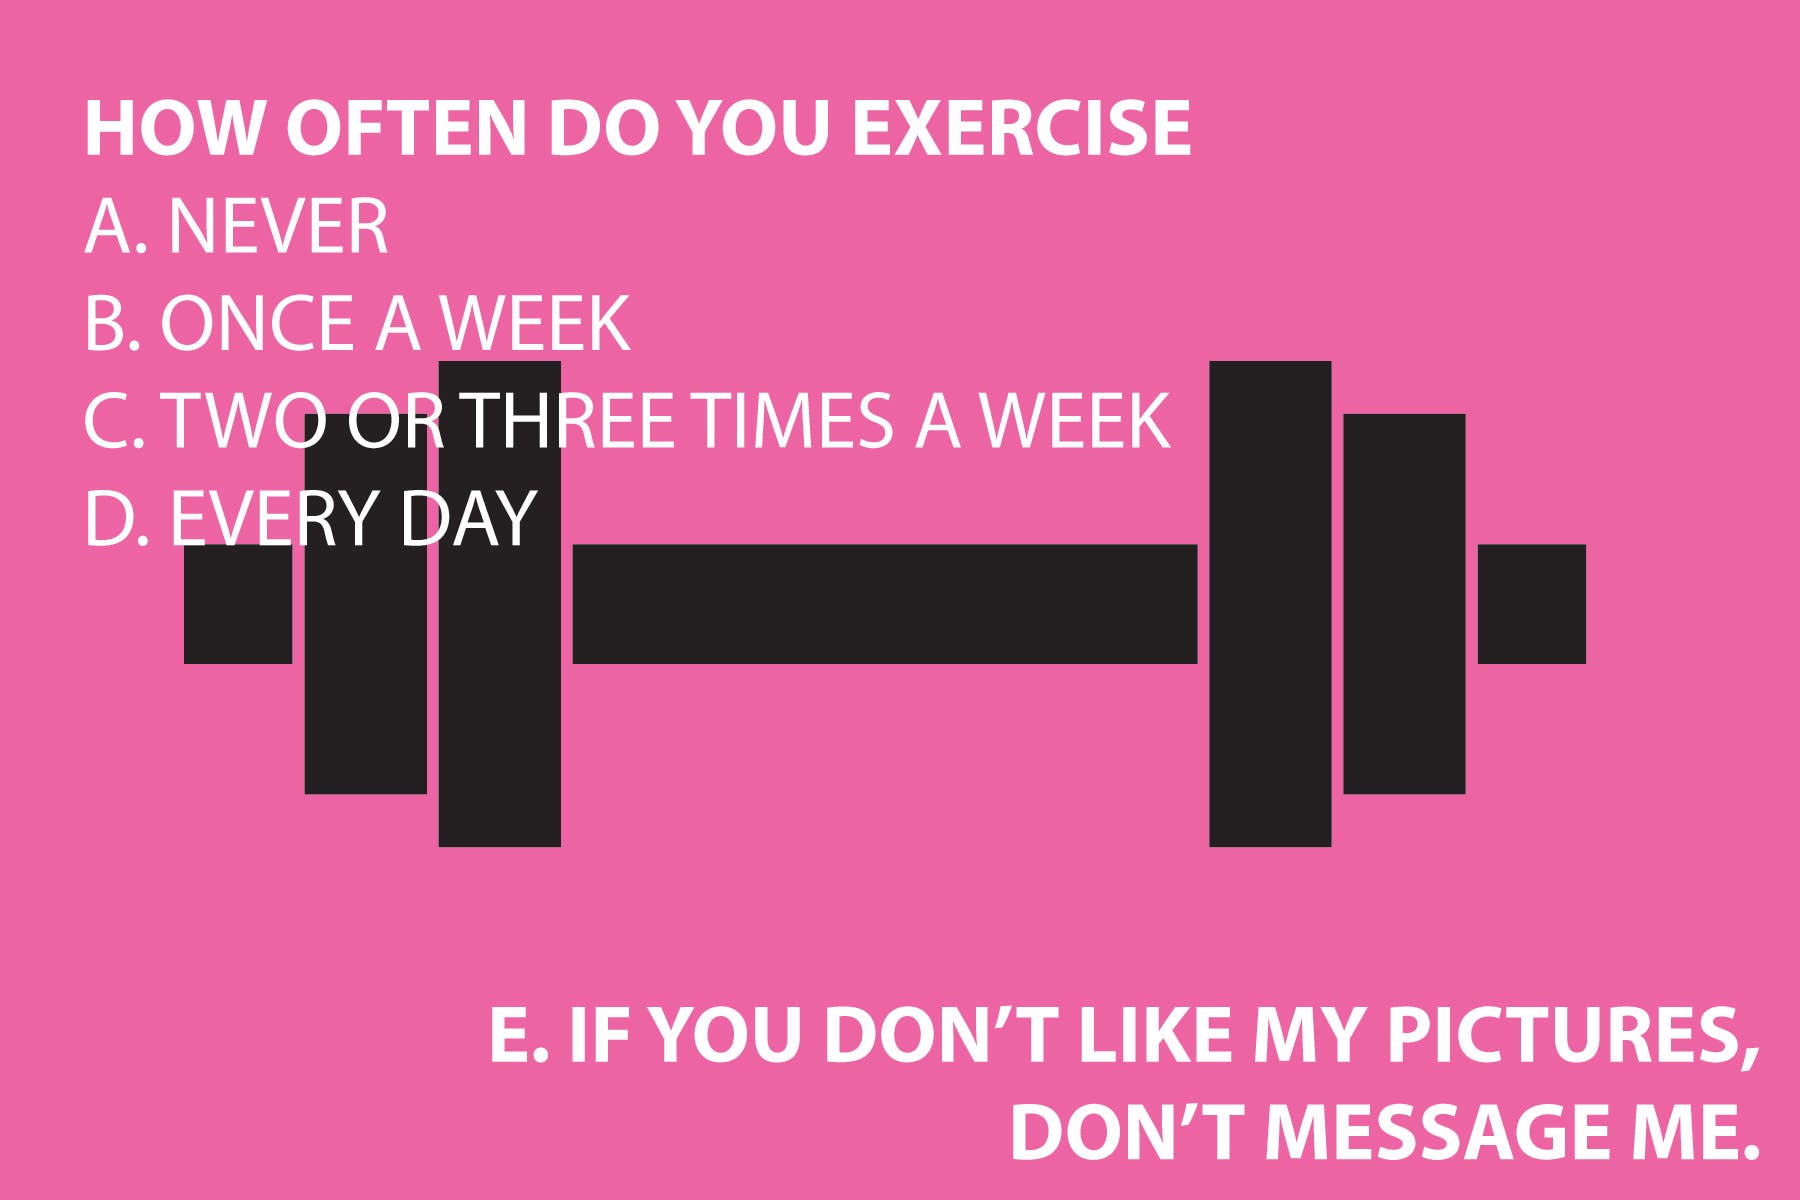  HOW OFTEN DO YOU EXERCISE?